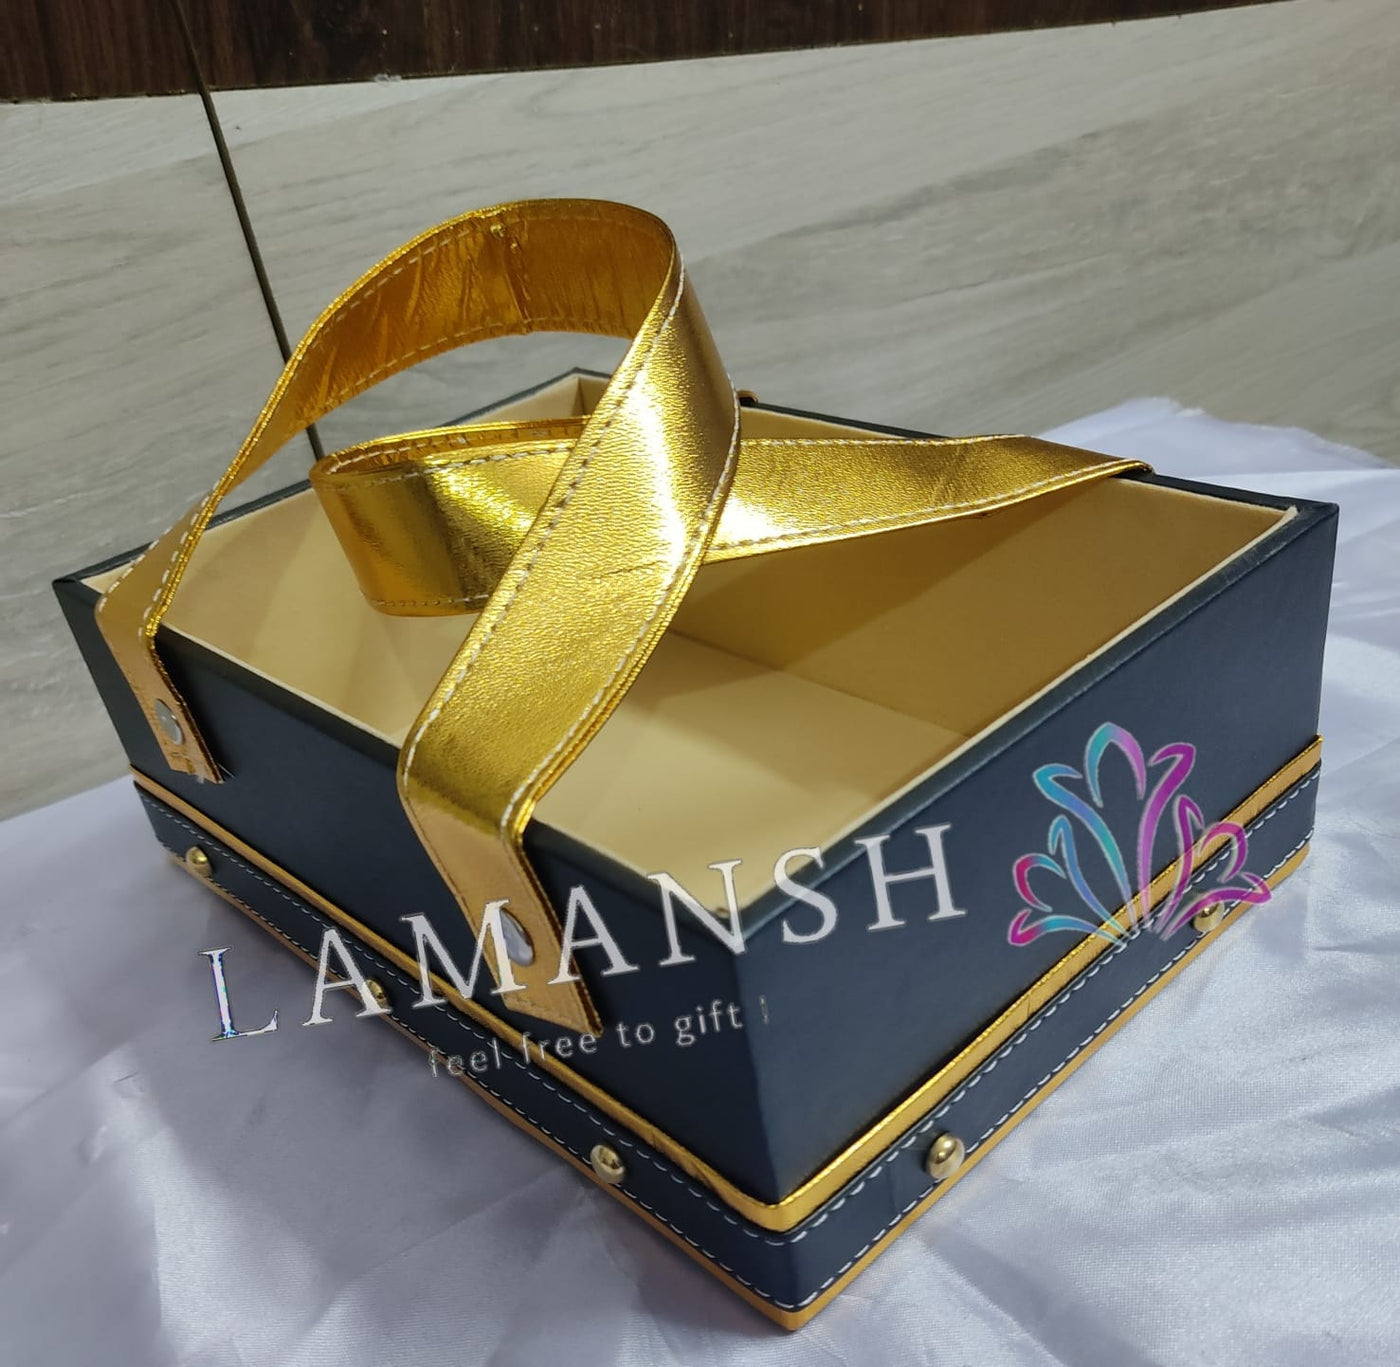 New Jaipur Handicraft Gift Baskets 💛 Black Lamansh® Pack of 1 Big size Luxurious Room Gift 🎁Hamper Basket